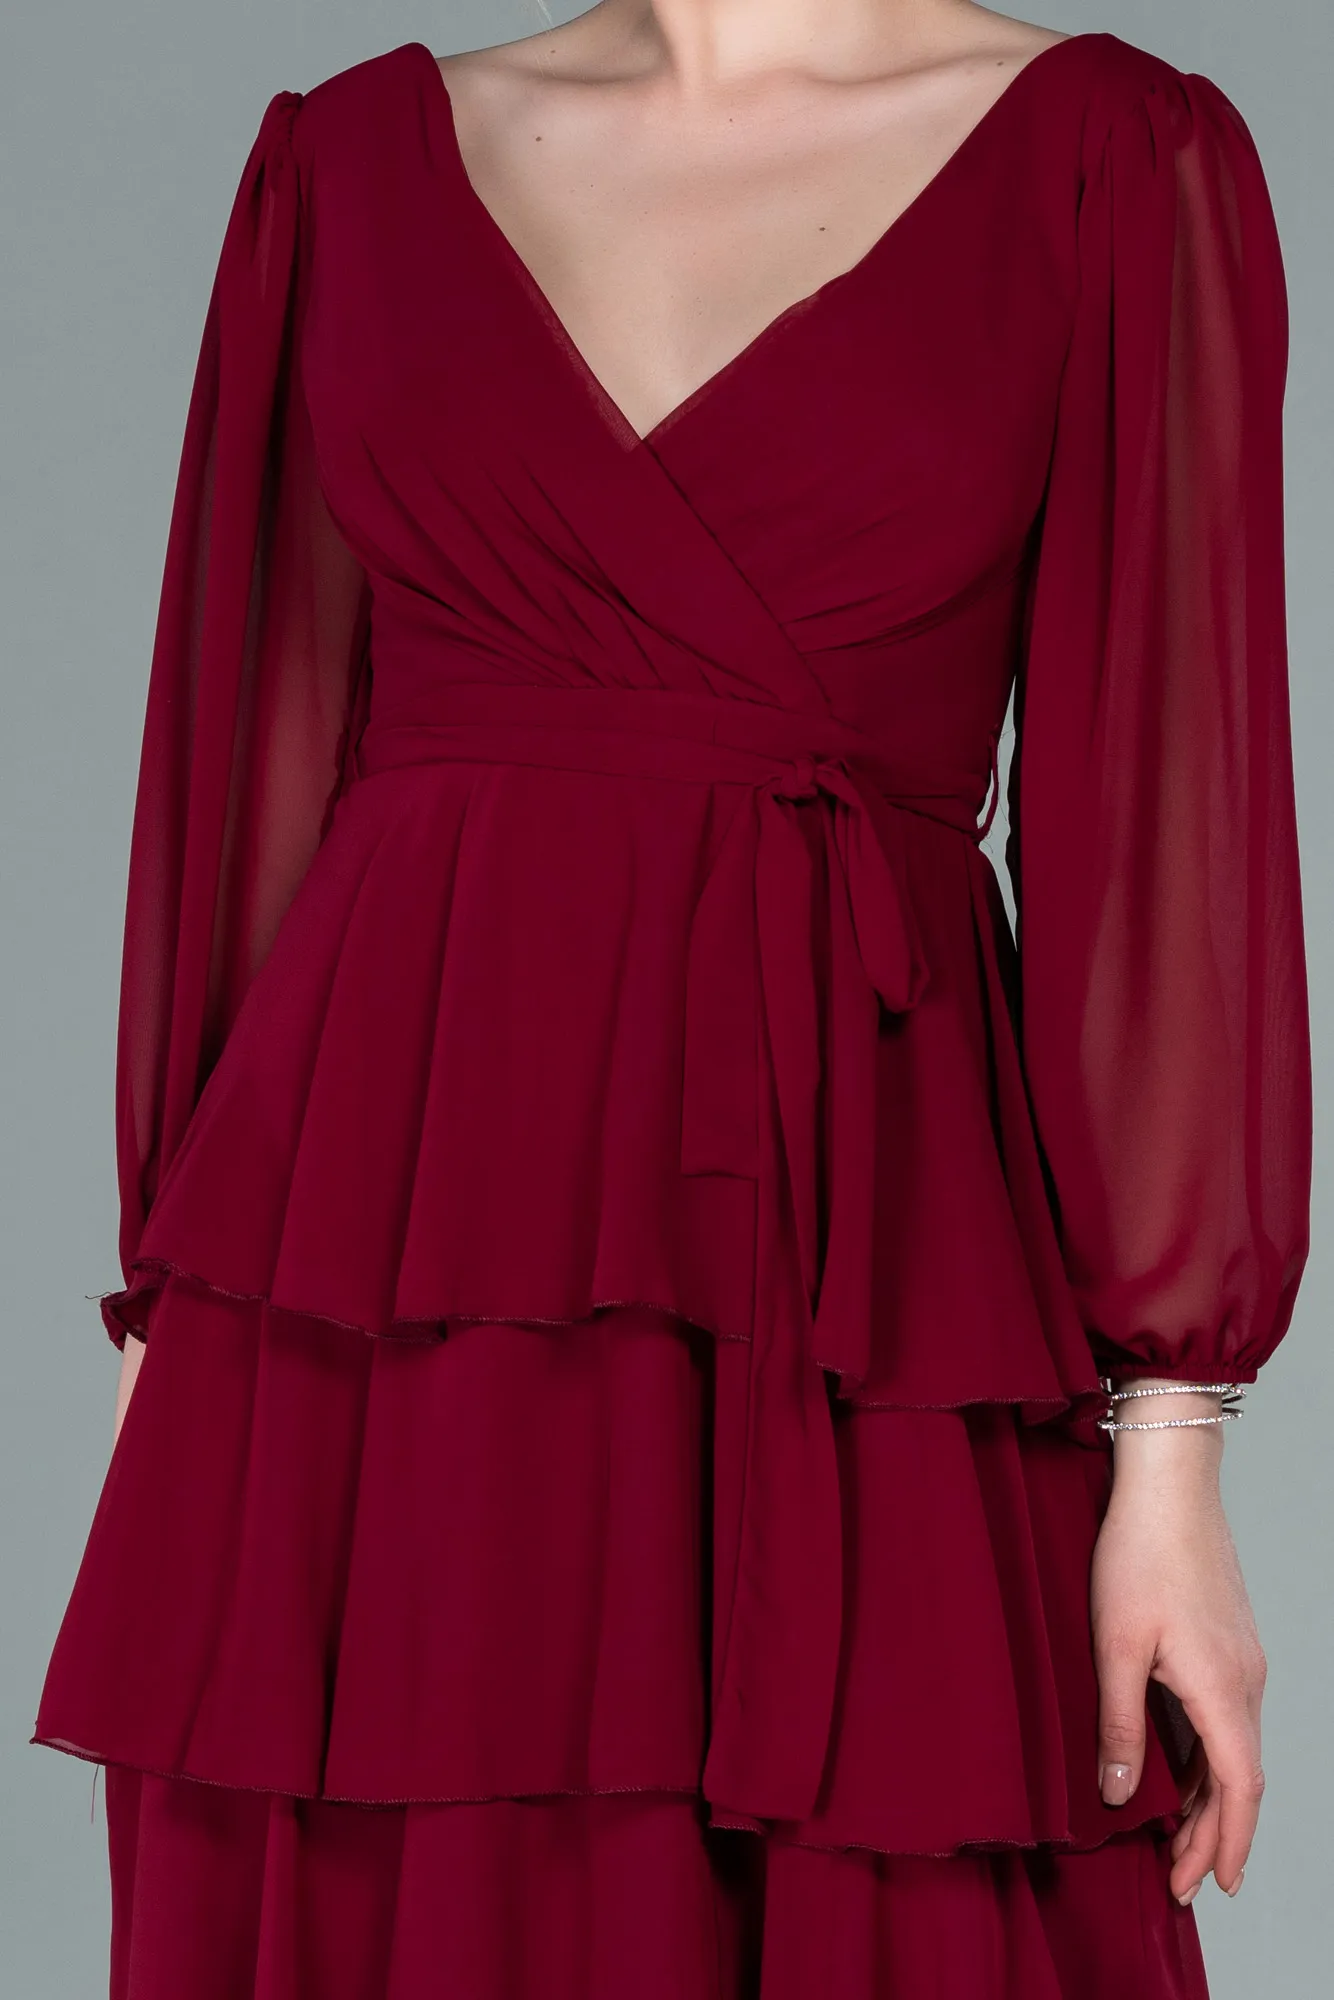 Burgundy-Long Chiffon Evening Dress ABU2322